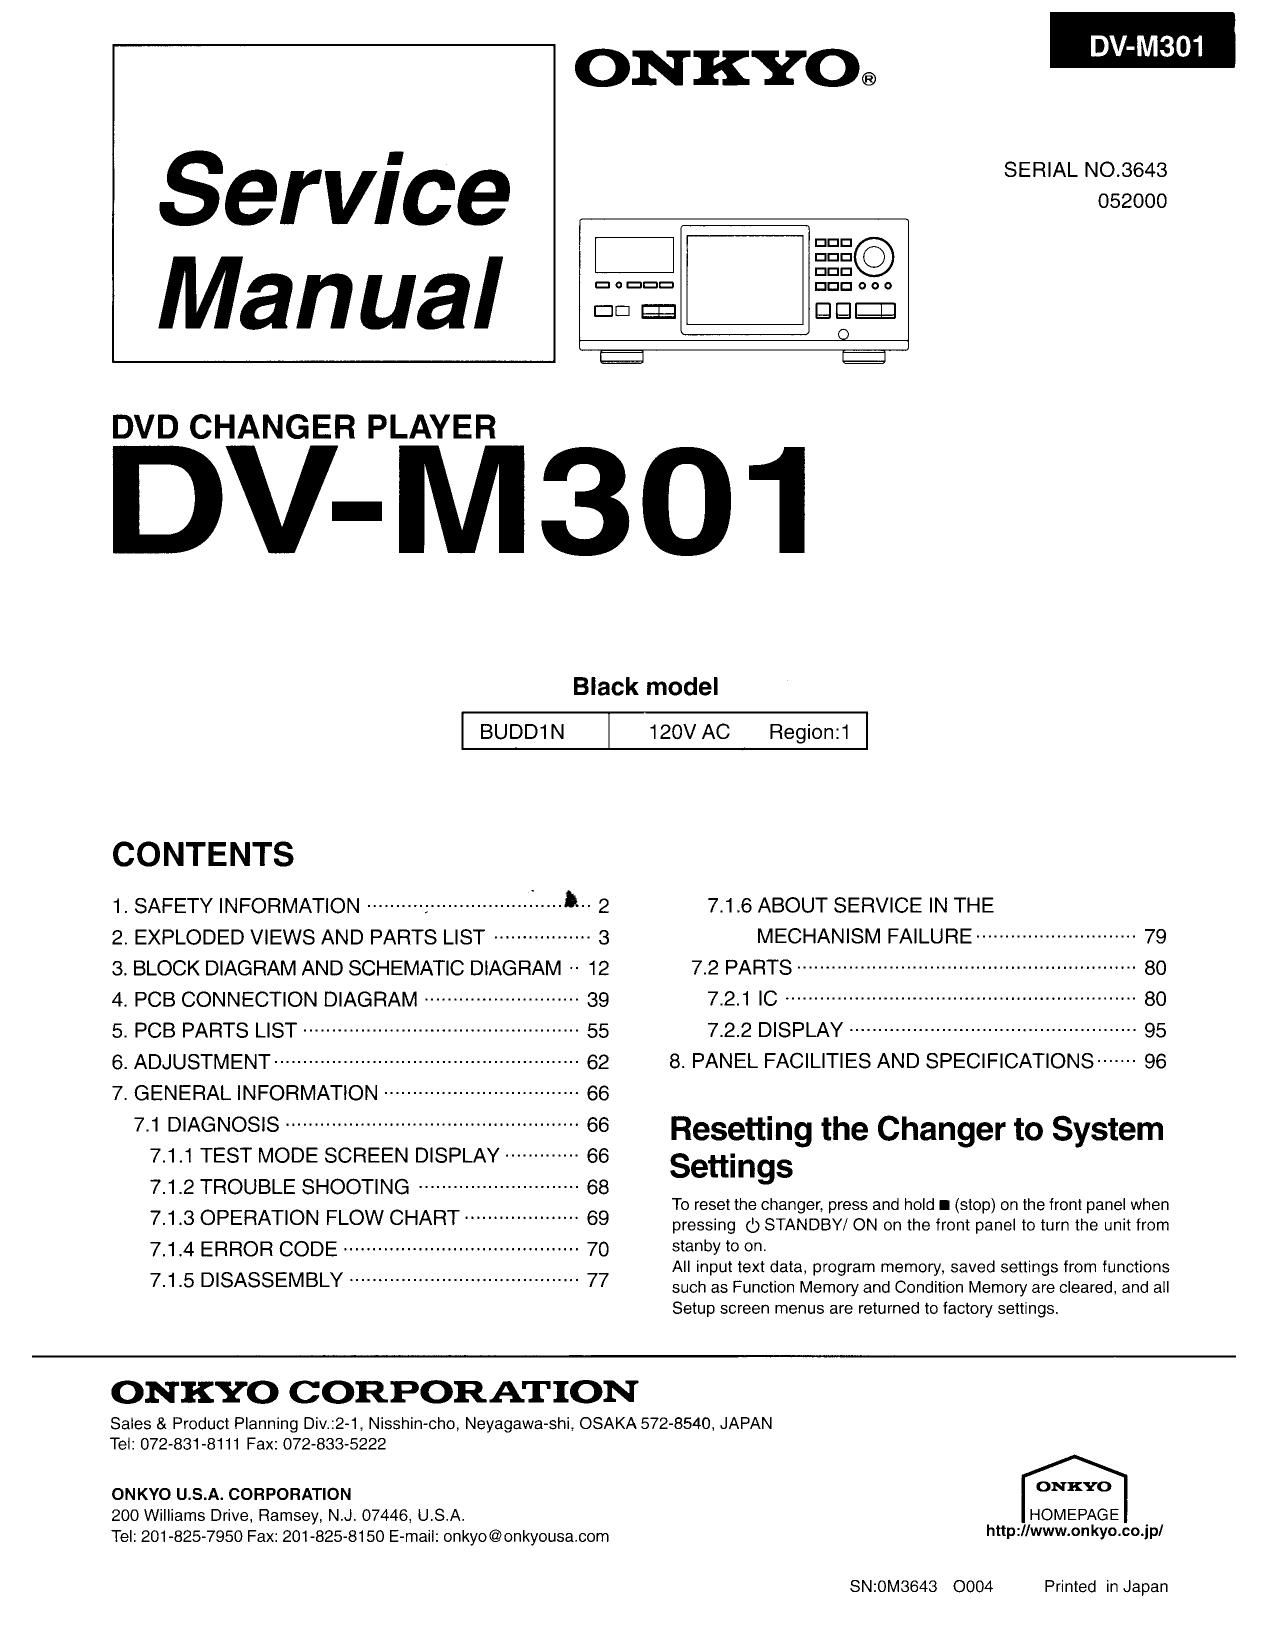 Onkyo DVM 301 Service Manual